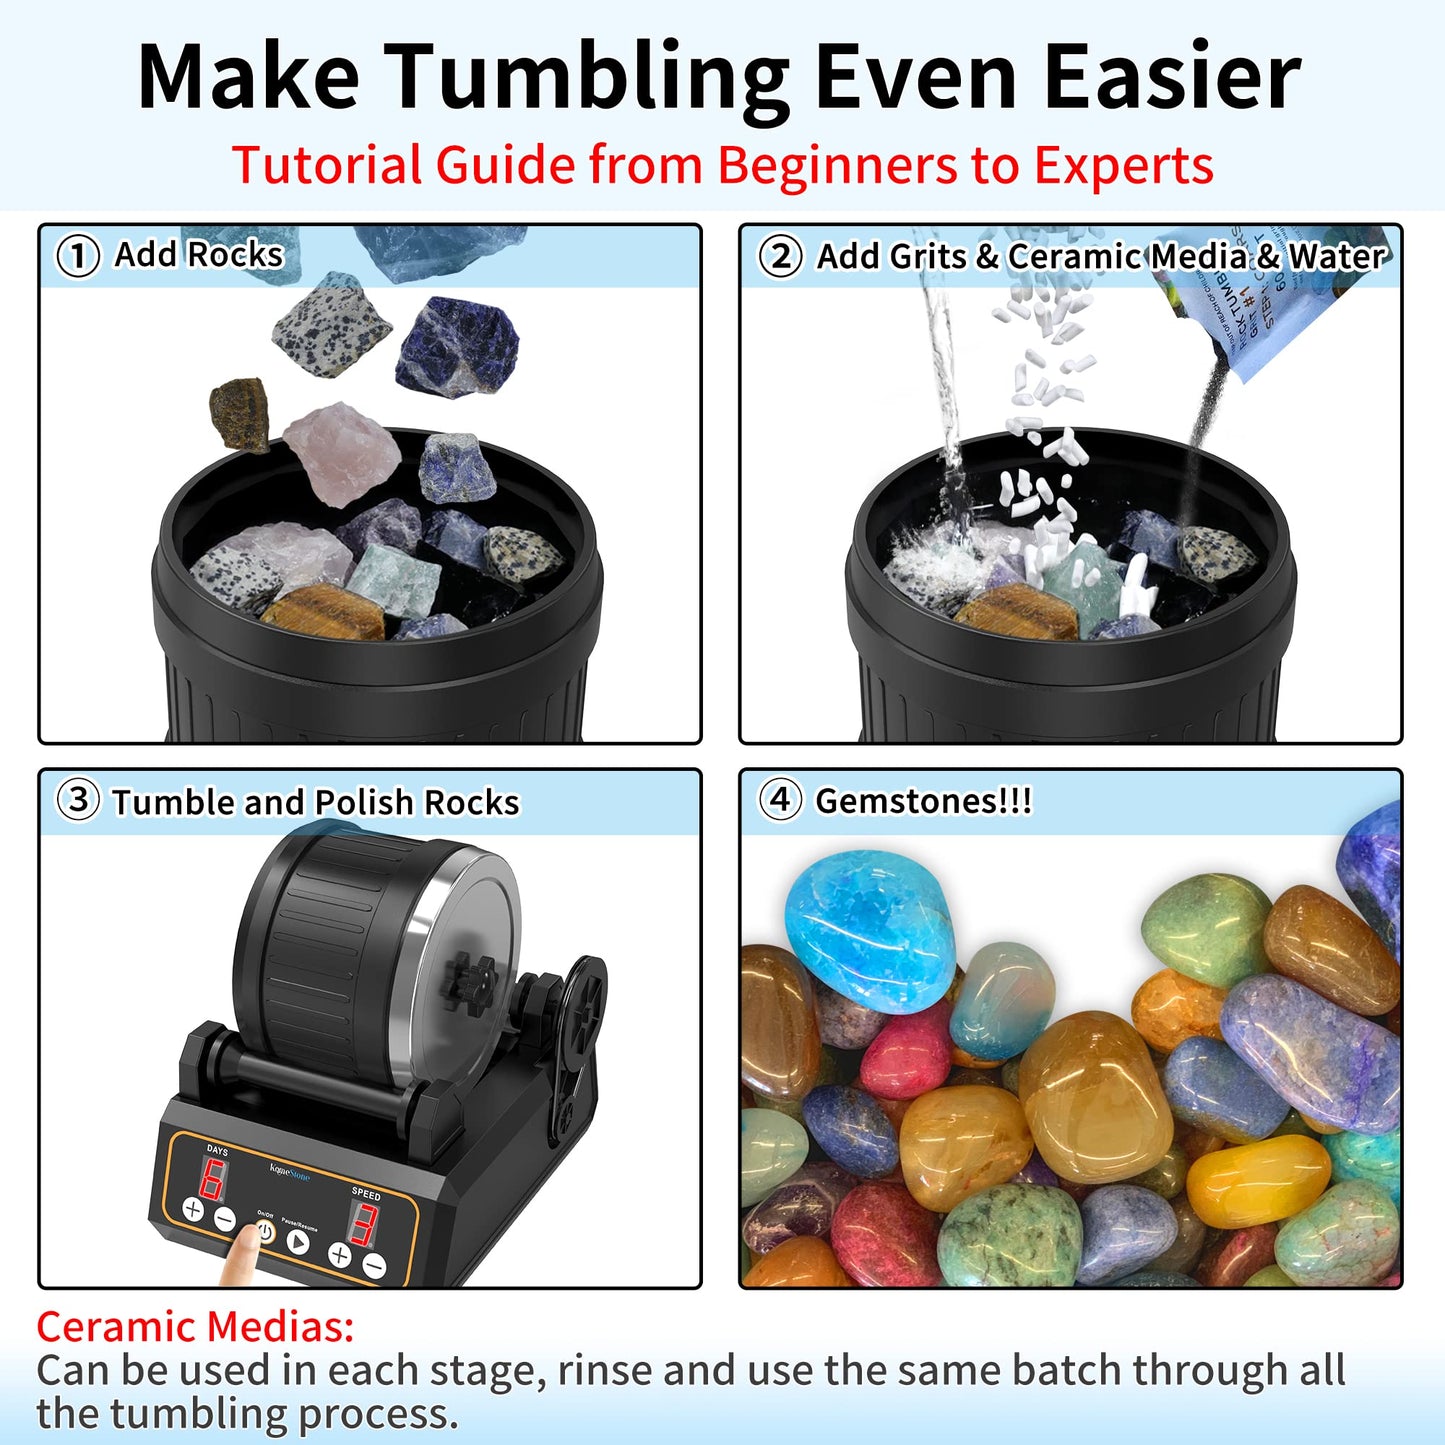 Rock Tumbler Polishing Filler Grit Ceramic Media Kit, 4 Pounds !